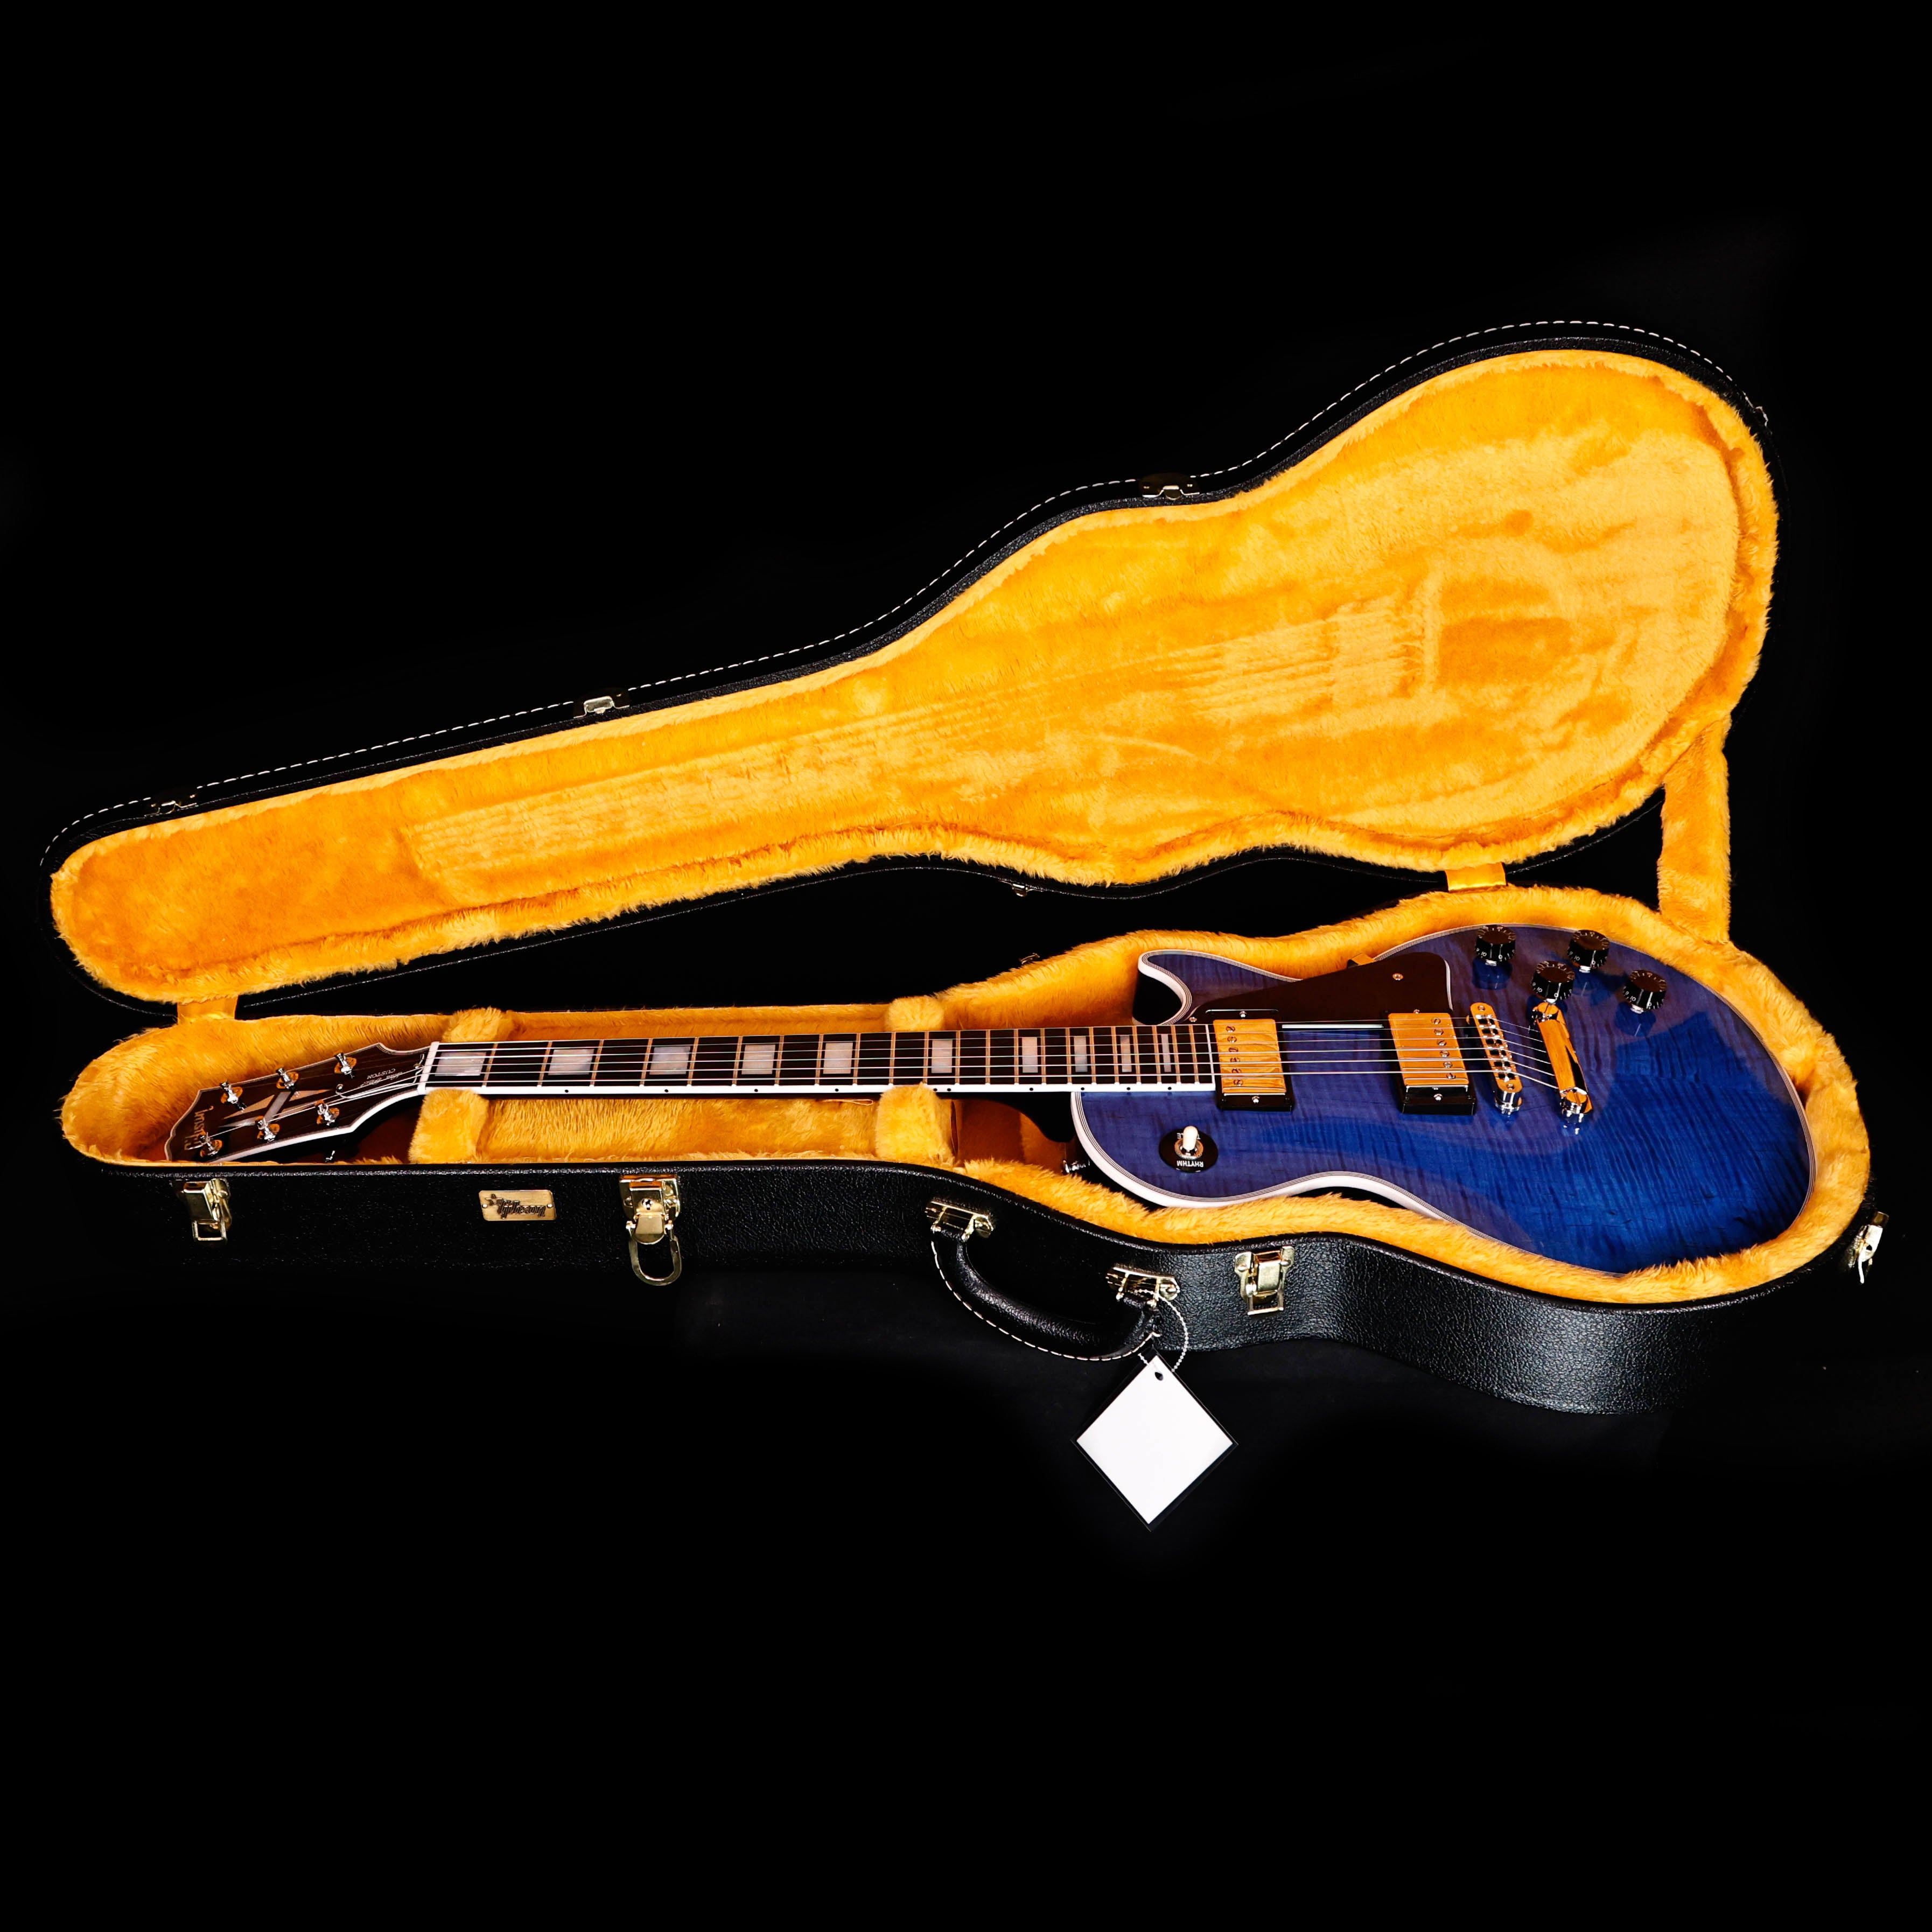 Gibson Les Paul Custom Figured, HAND SELECTED TOP Translucent Blue Gloss, Nickel Hw 9lbs 11.8oz